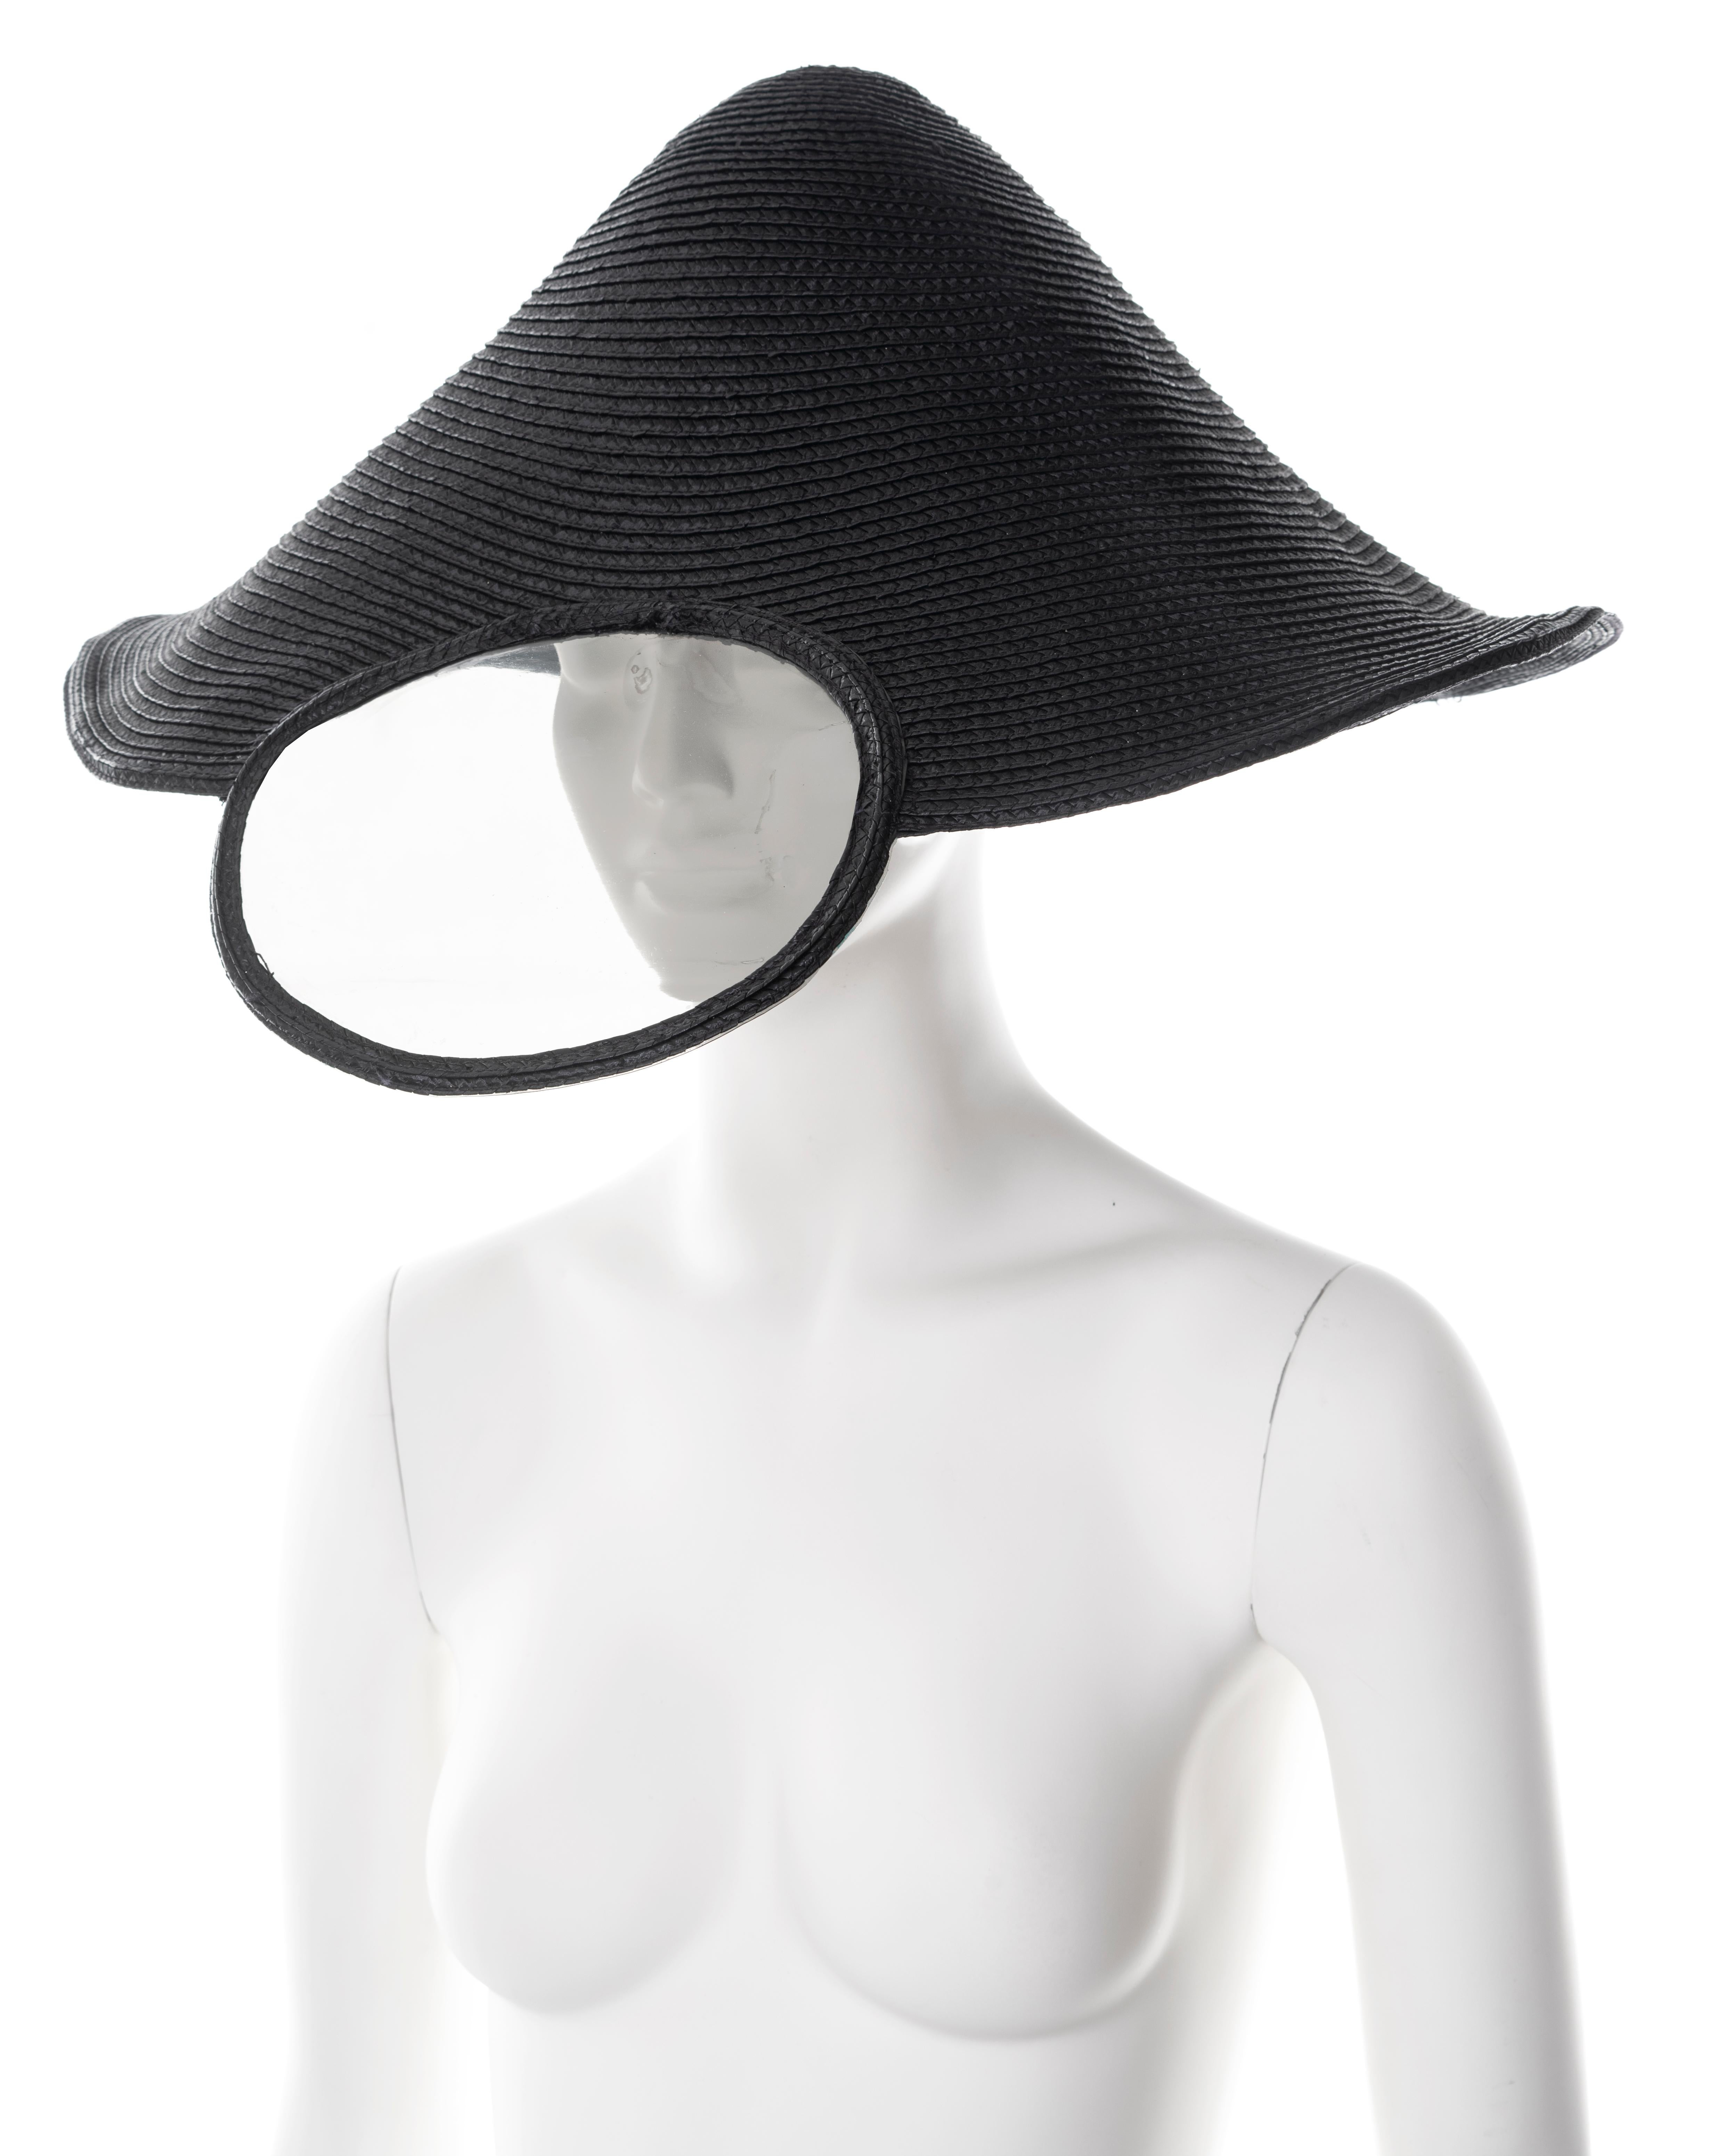 Paco Rabanne x Regis Haute Couture black straw hat with vinyl visor, ss 1994 1